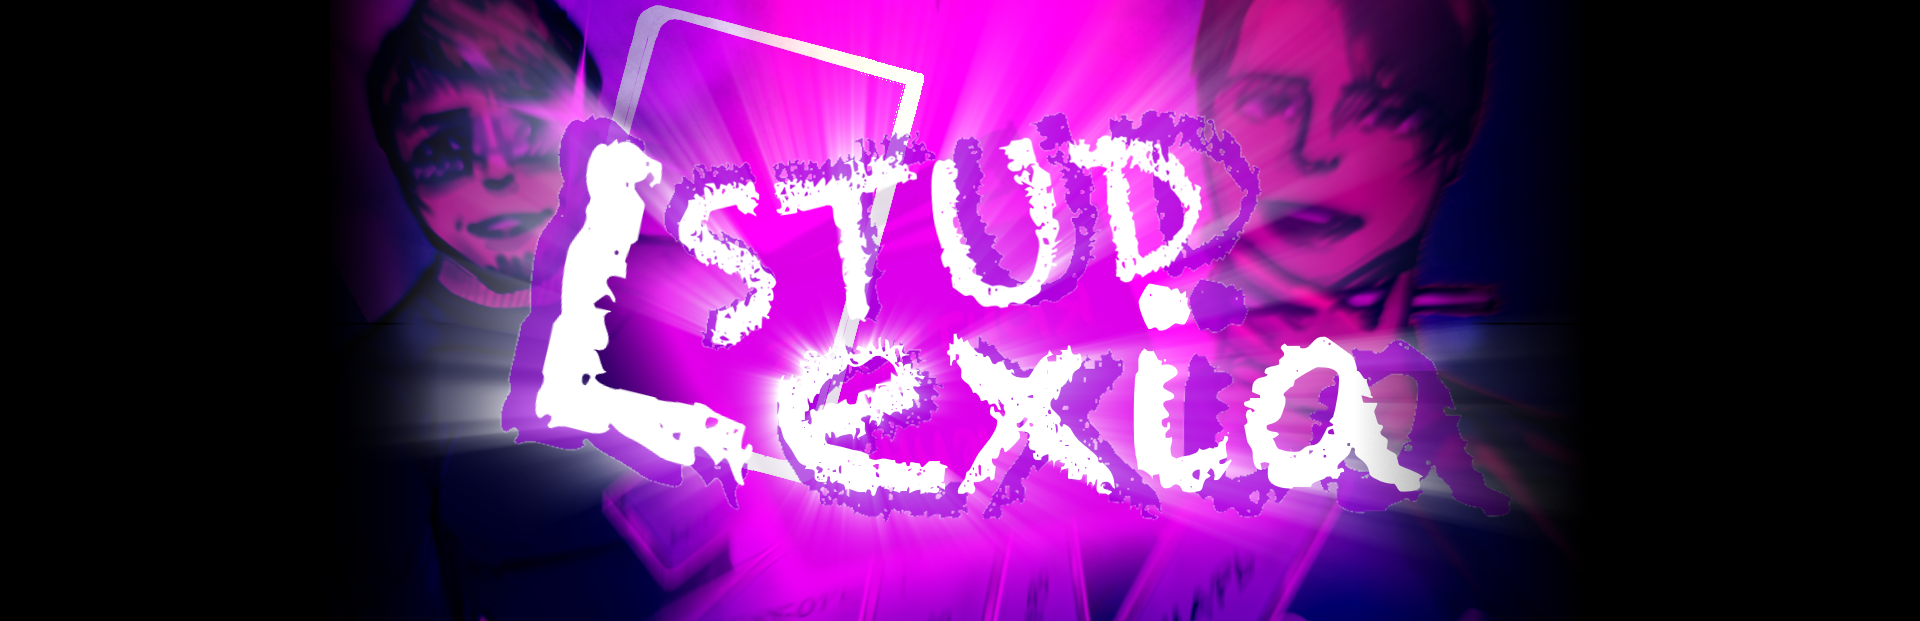 Studlexia [Jam Build]